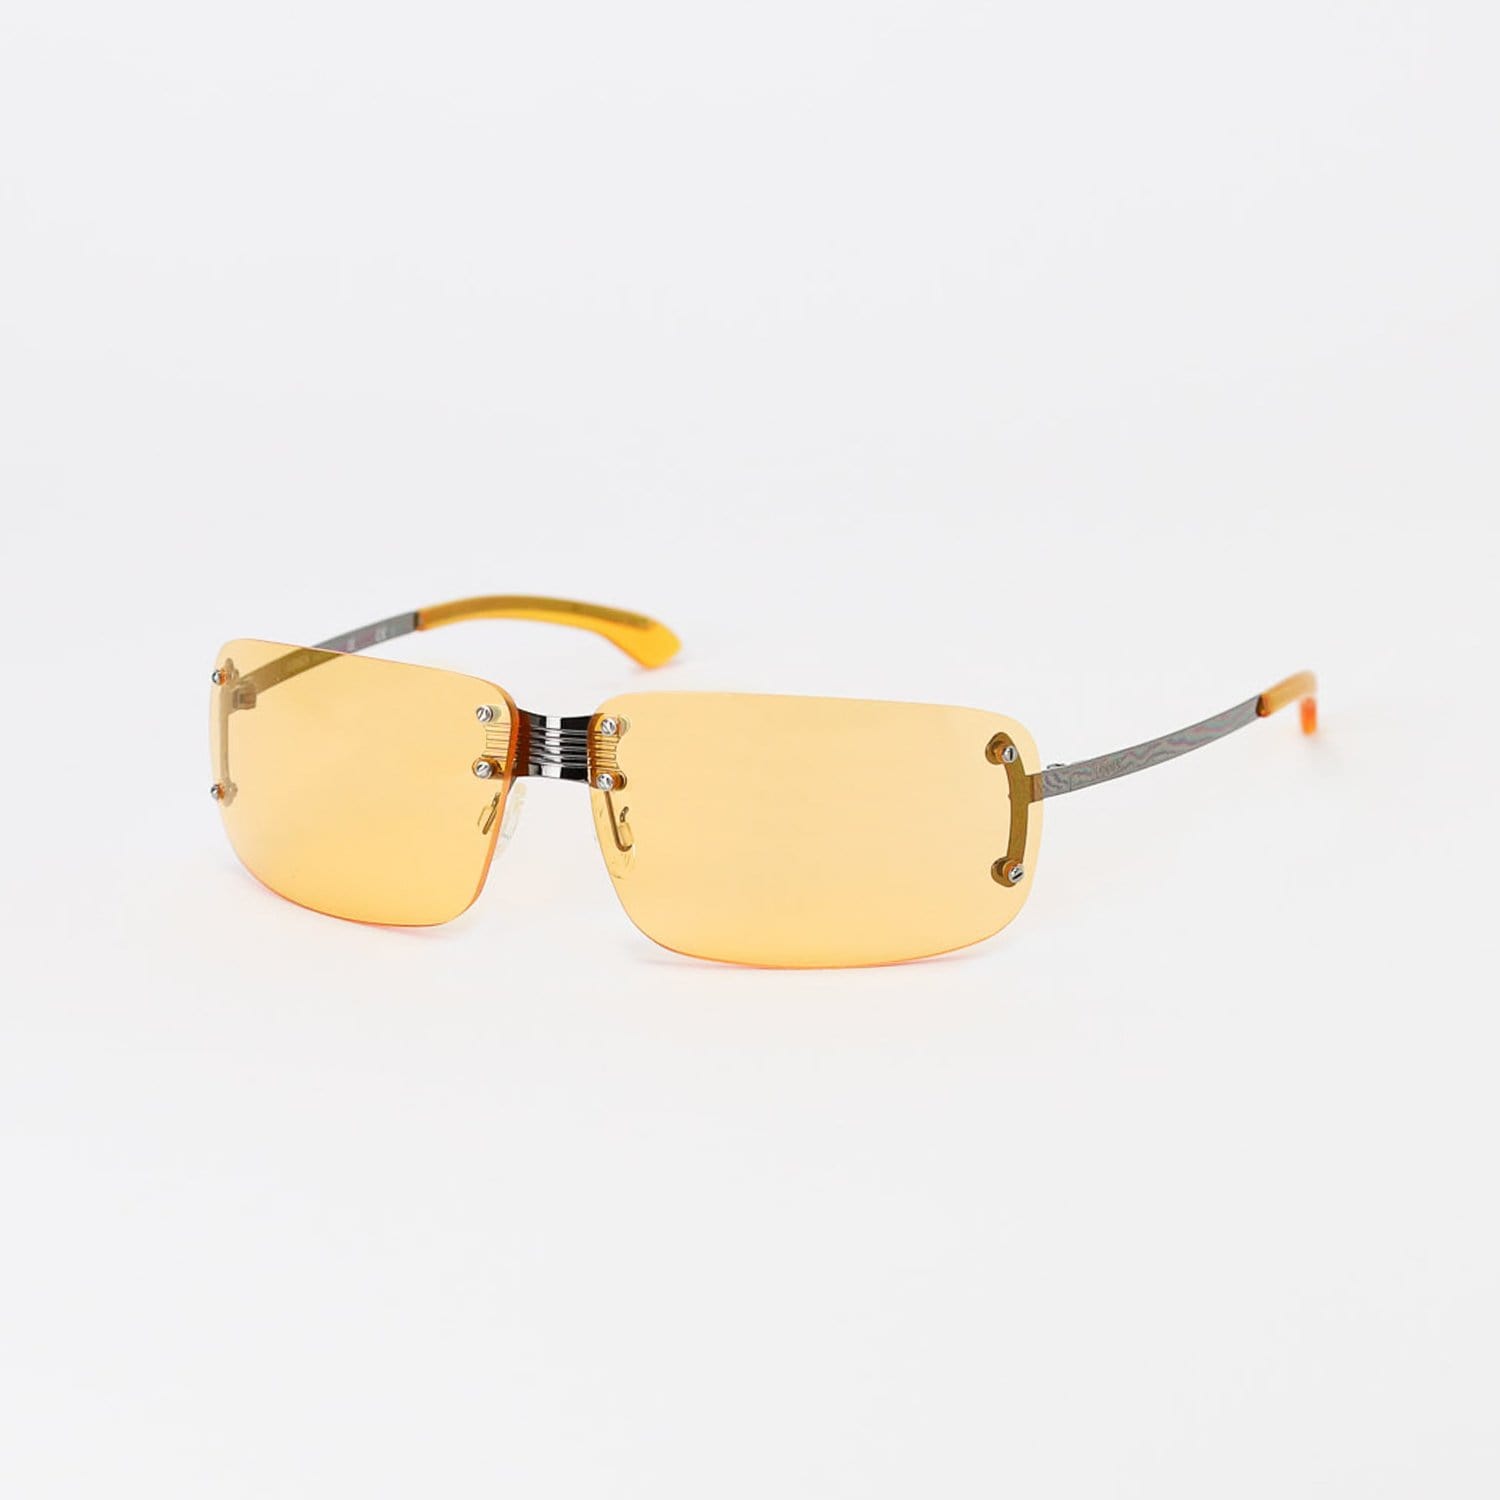 versace orange sunglasses